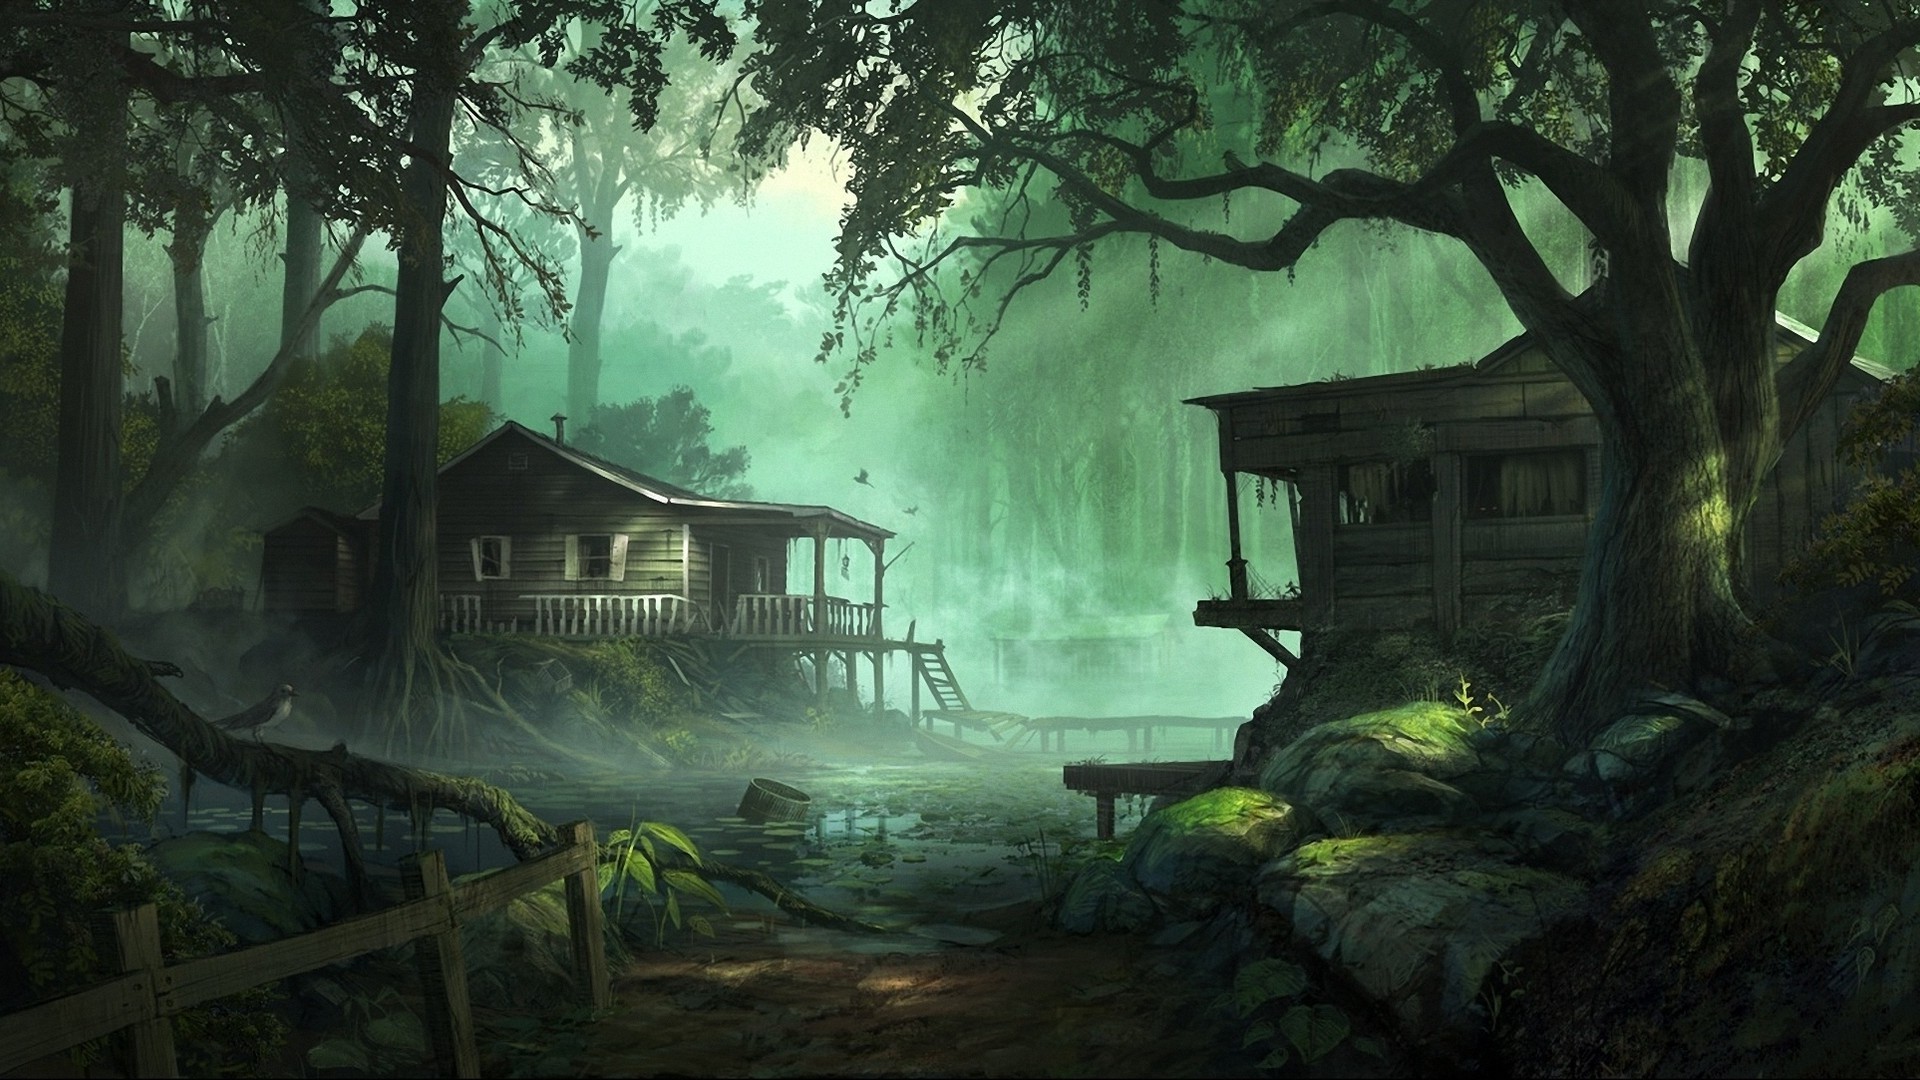 fantasy Art, Digital Art, Artwork, Nature, Trees, House, Water, Mist